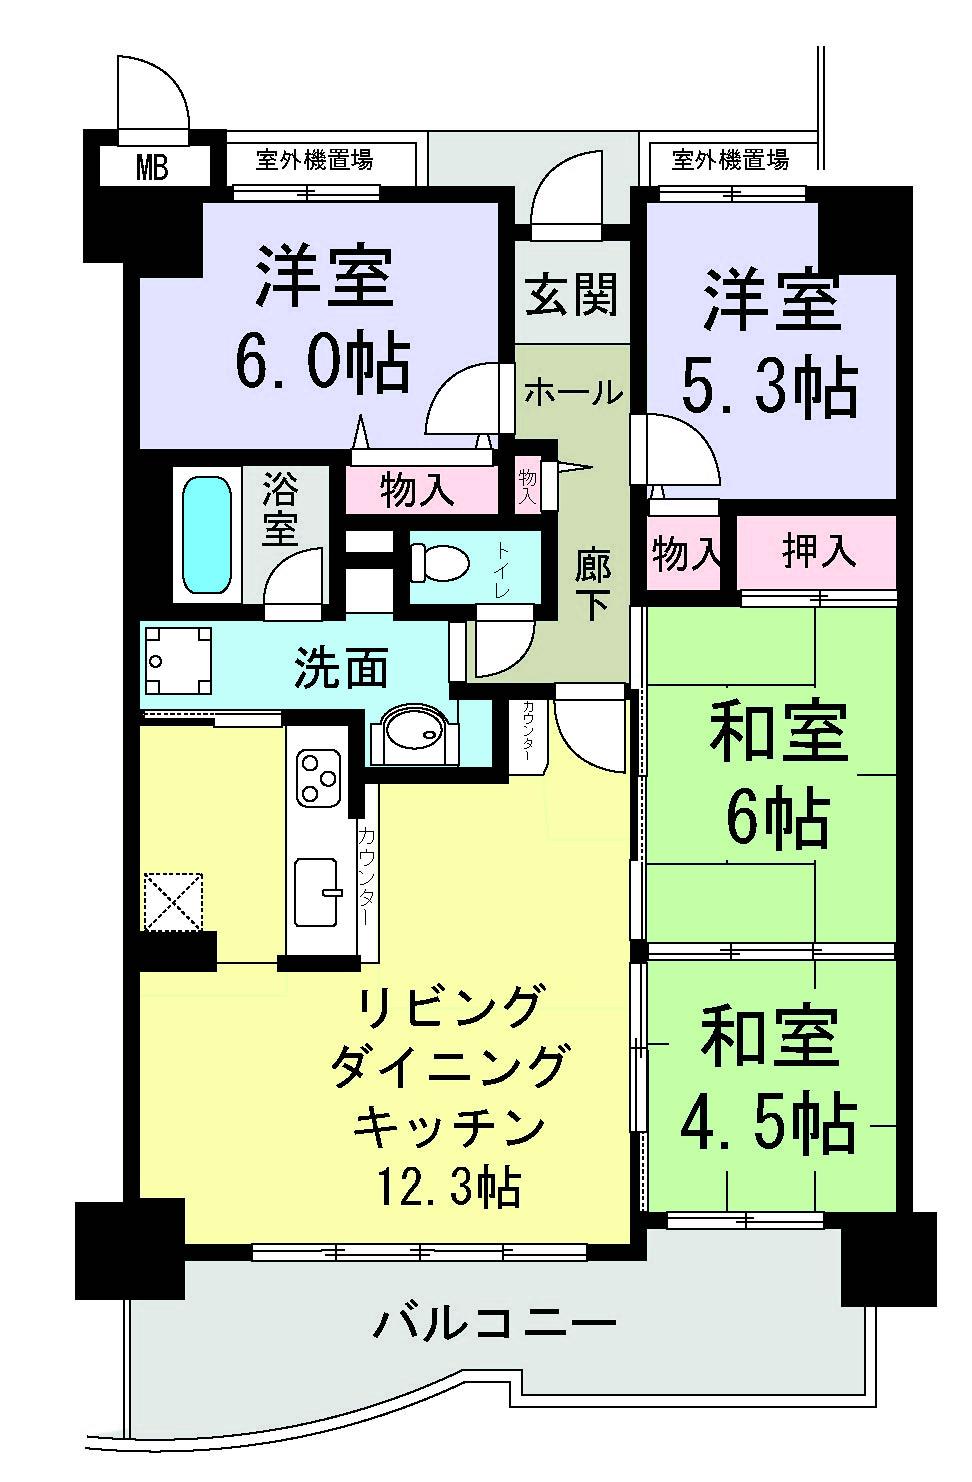 Floor plan. 4LDK, Price 12.8 million yen, Occupied area 80.93 sq m , Balcony area 11.63 sq m